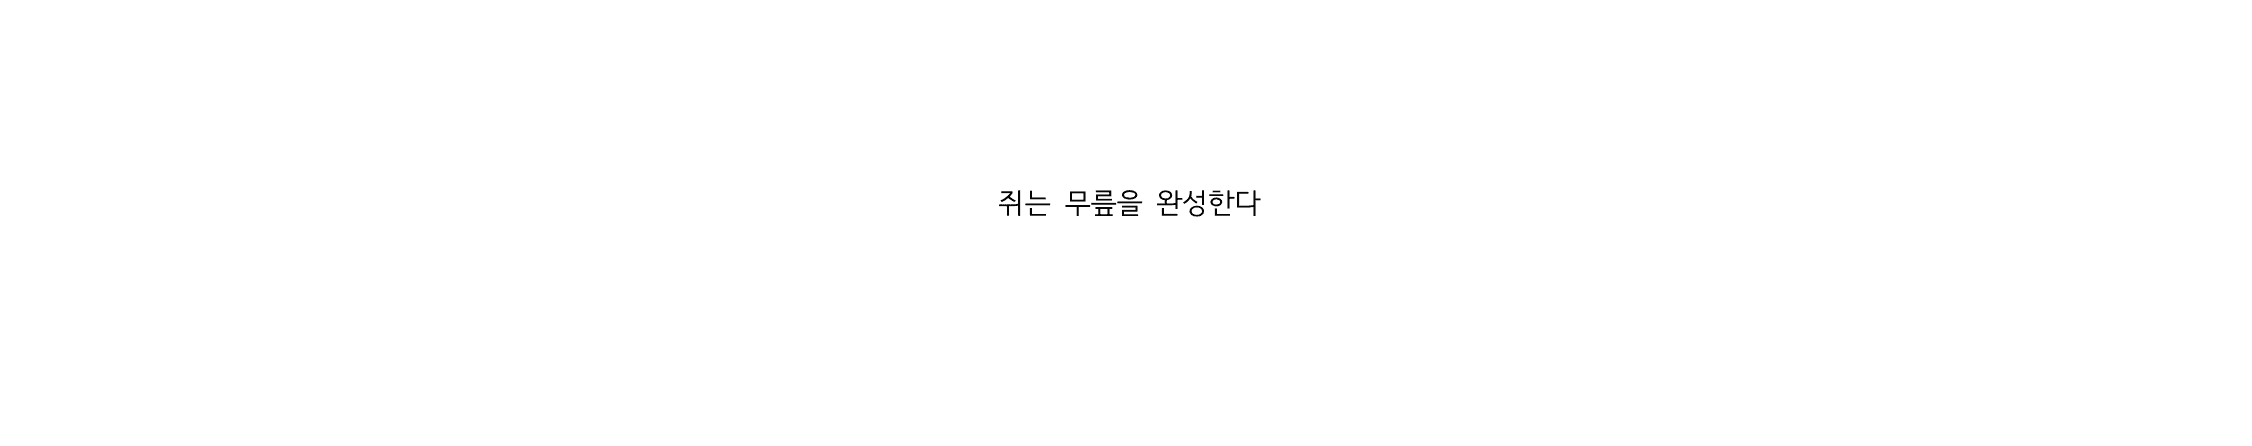 BaeSooYeon banner